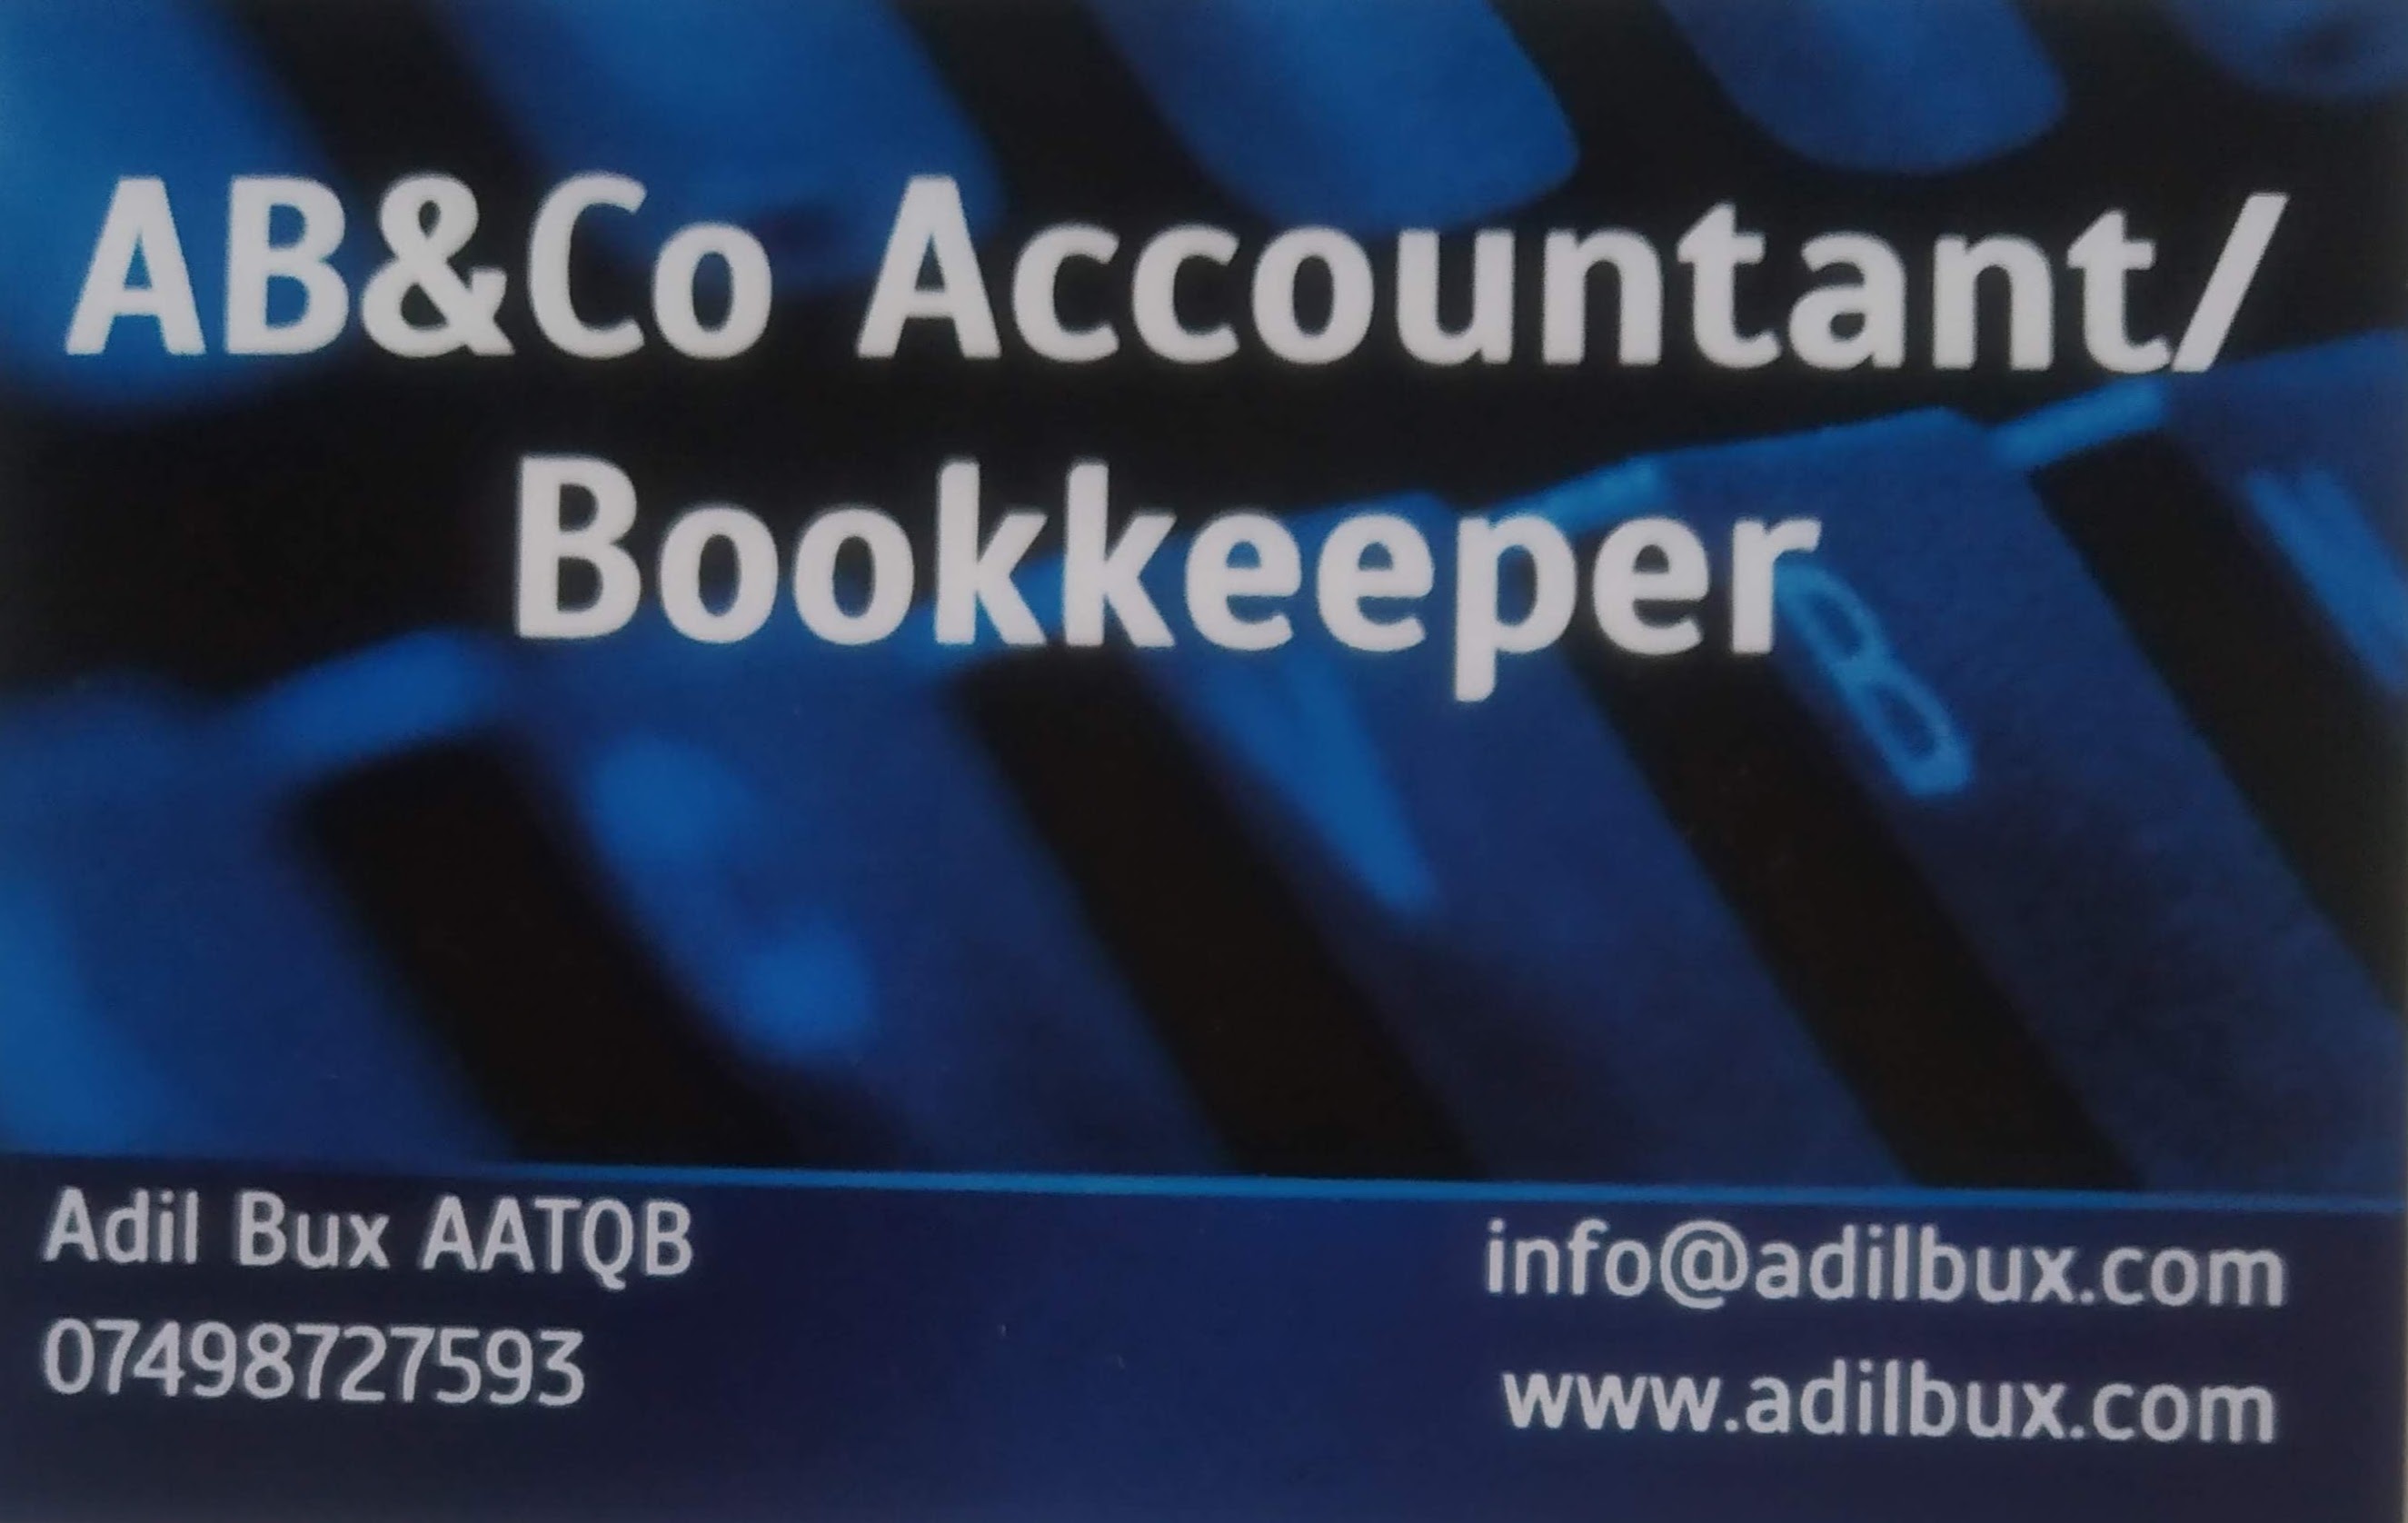 AB&Co Bookkeeper/Accountant